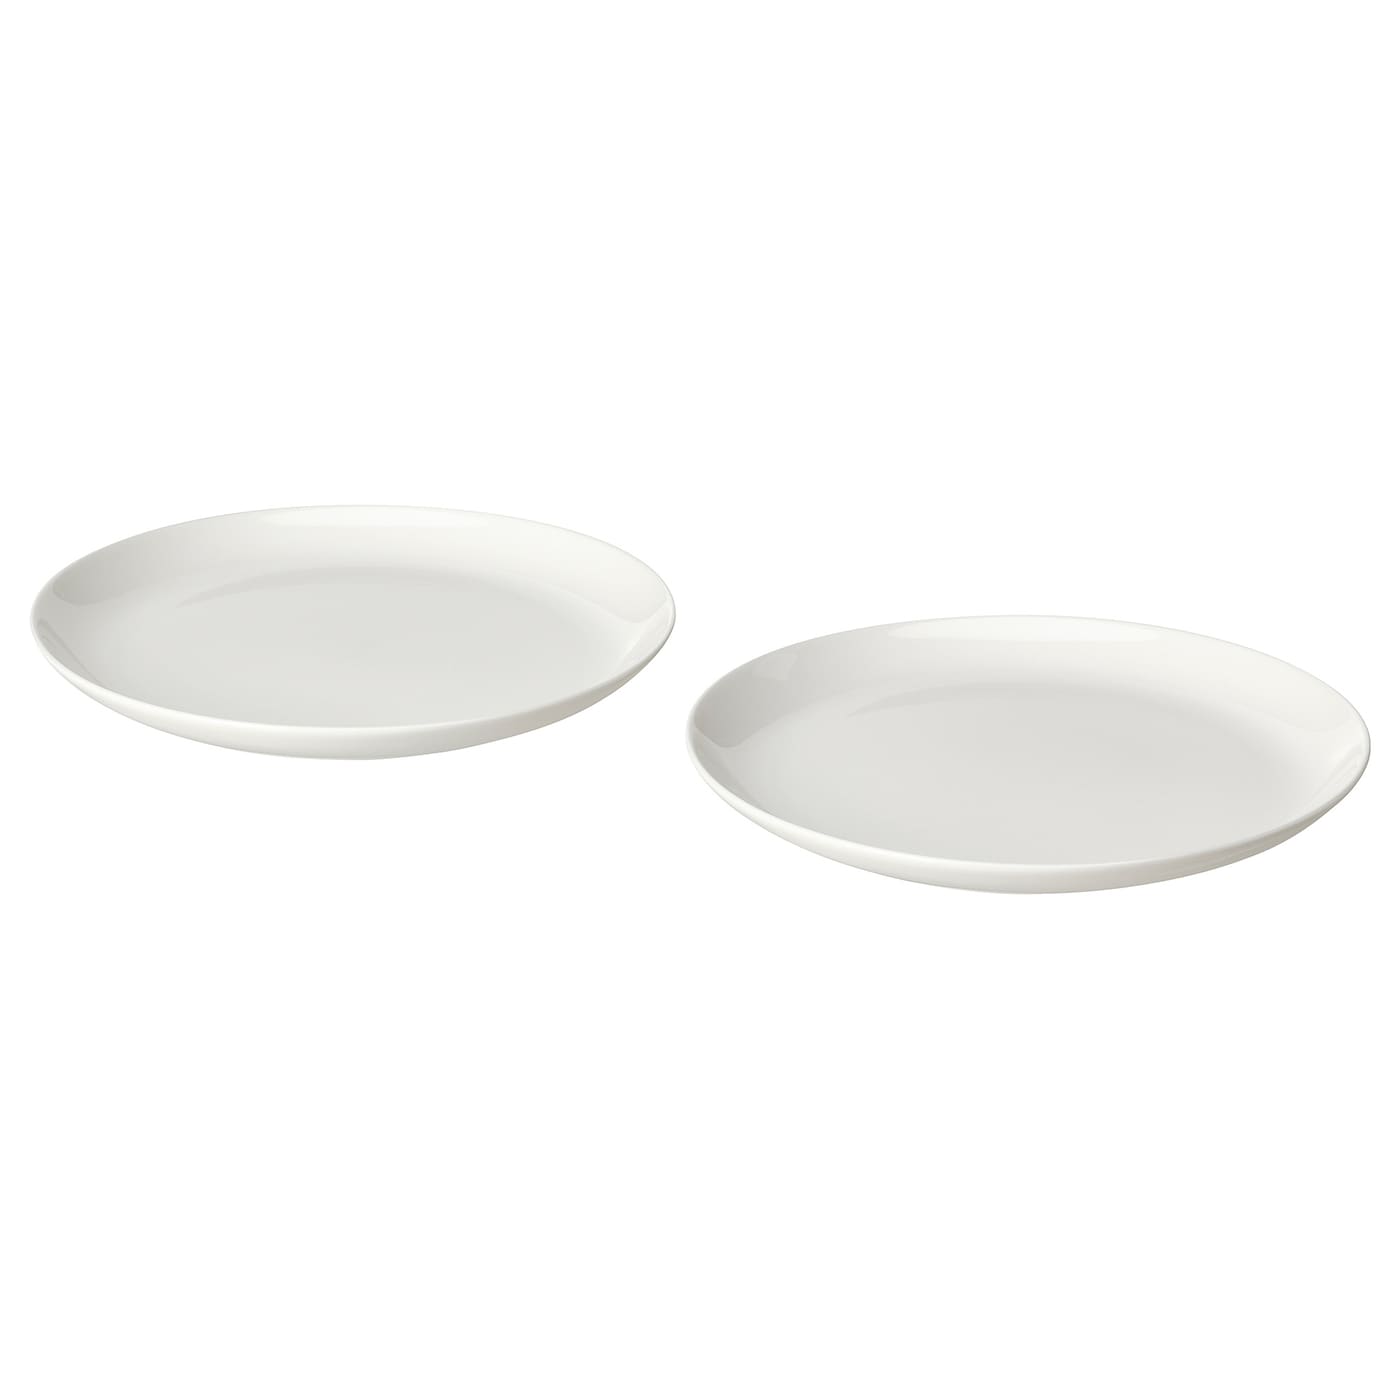 Набор тарелок, 2 шт. - IKEA FRÖJDEFULL/FROJDEFULL, 19 см, белый, ФРЁЙДЕФУЛЛ ИКЕА